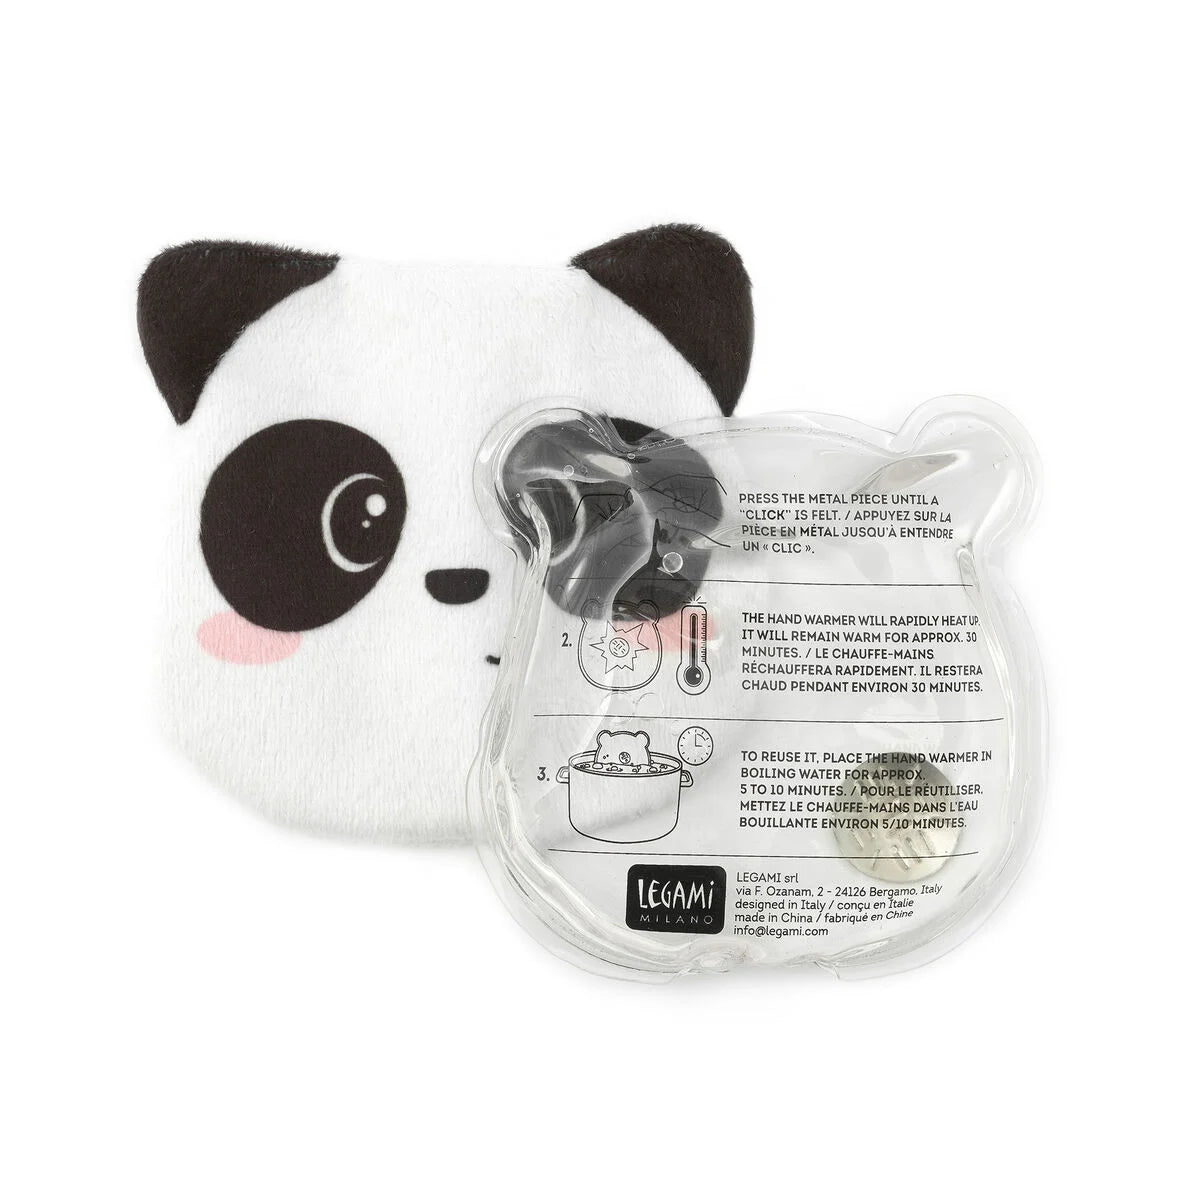 Fab Gifts | Legami Hand Warmer Panda by Weirs of Baggot Street